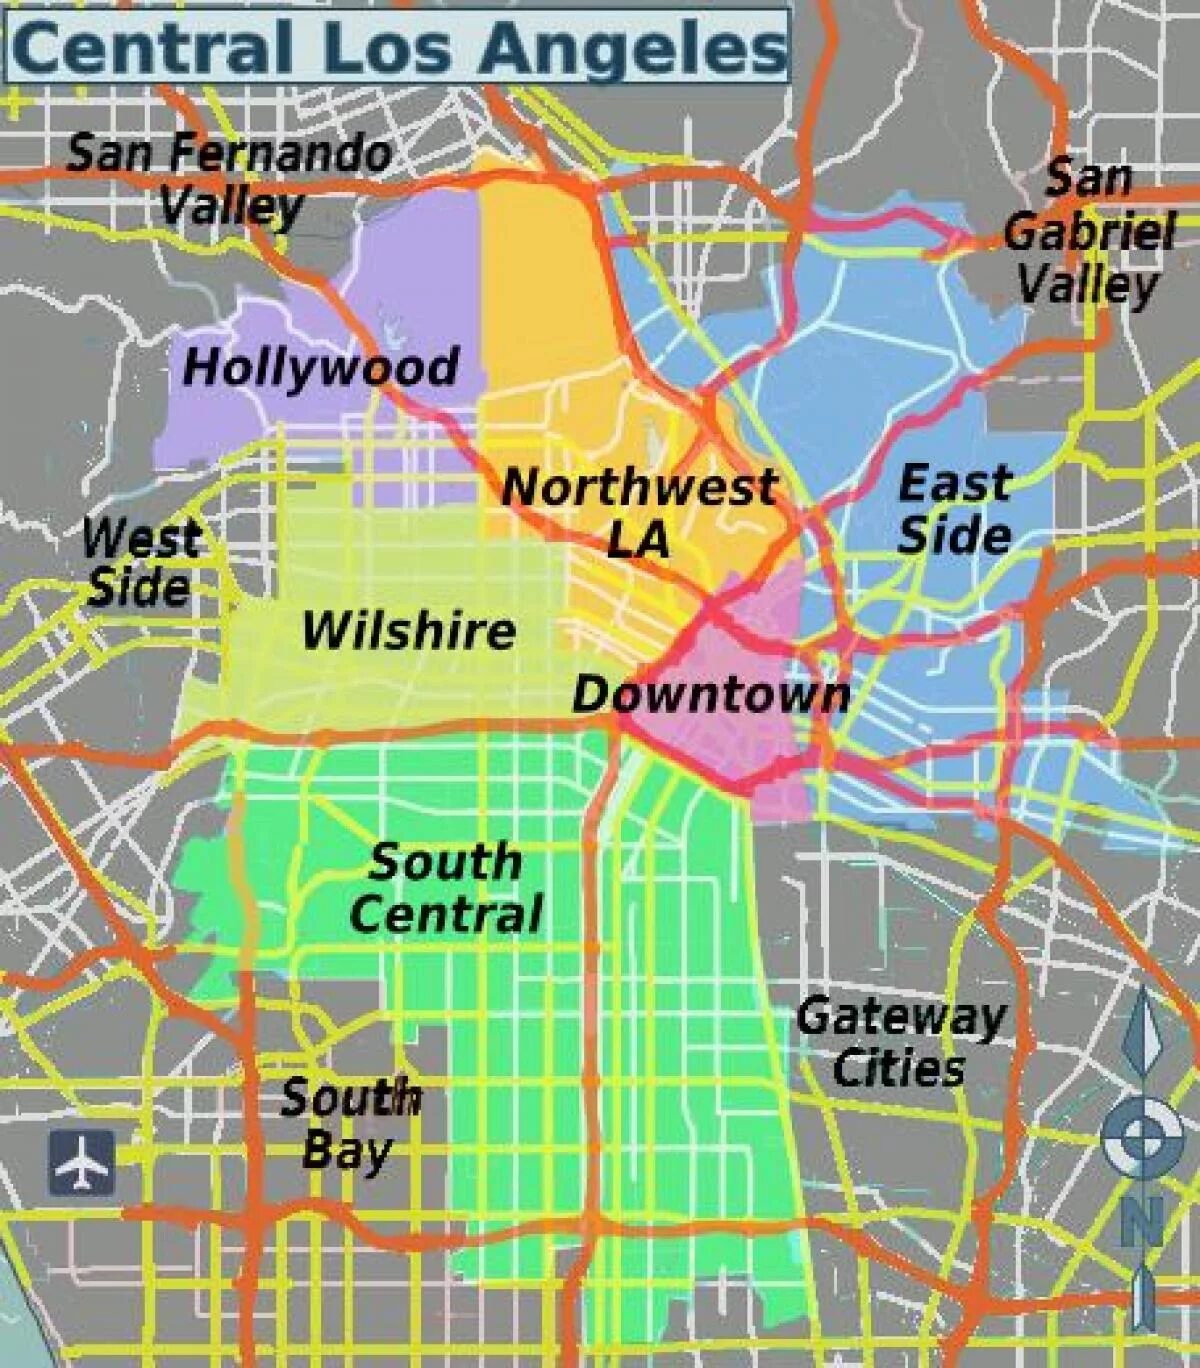 Los angeles 52 текст. Южный централ на карте Лос Анджелеса. Районы Лос Анджелеса на карте. Районы в Лос Анджелесе. Лос Анджелес Южный централ районы.